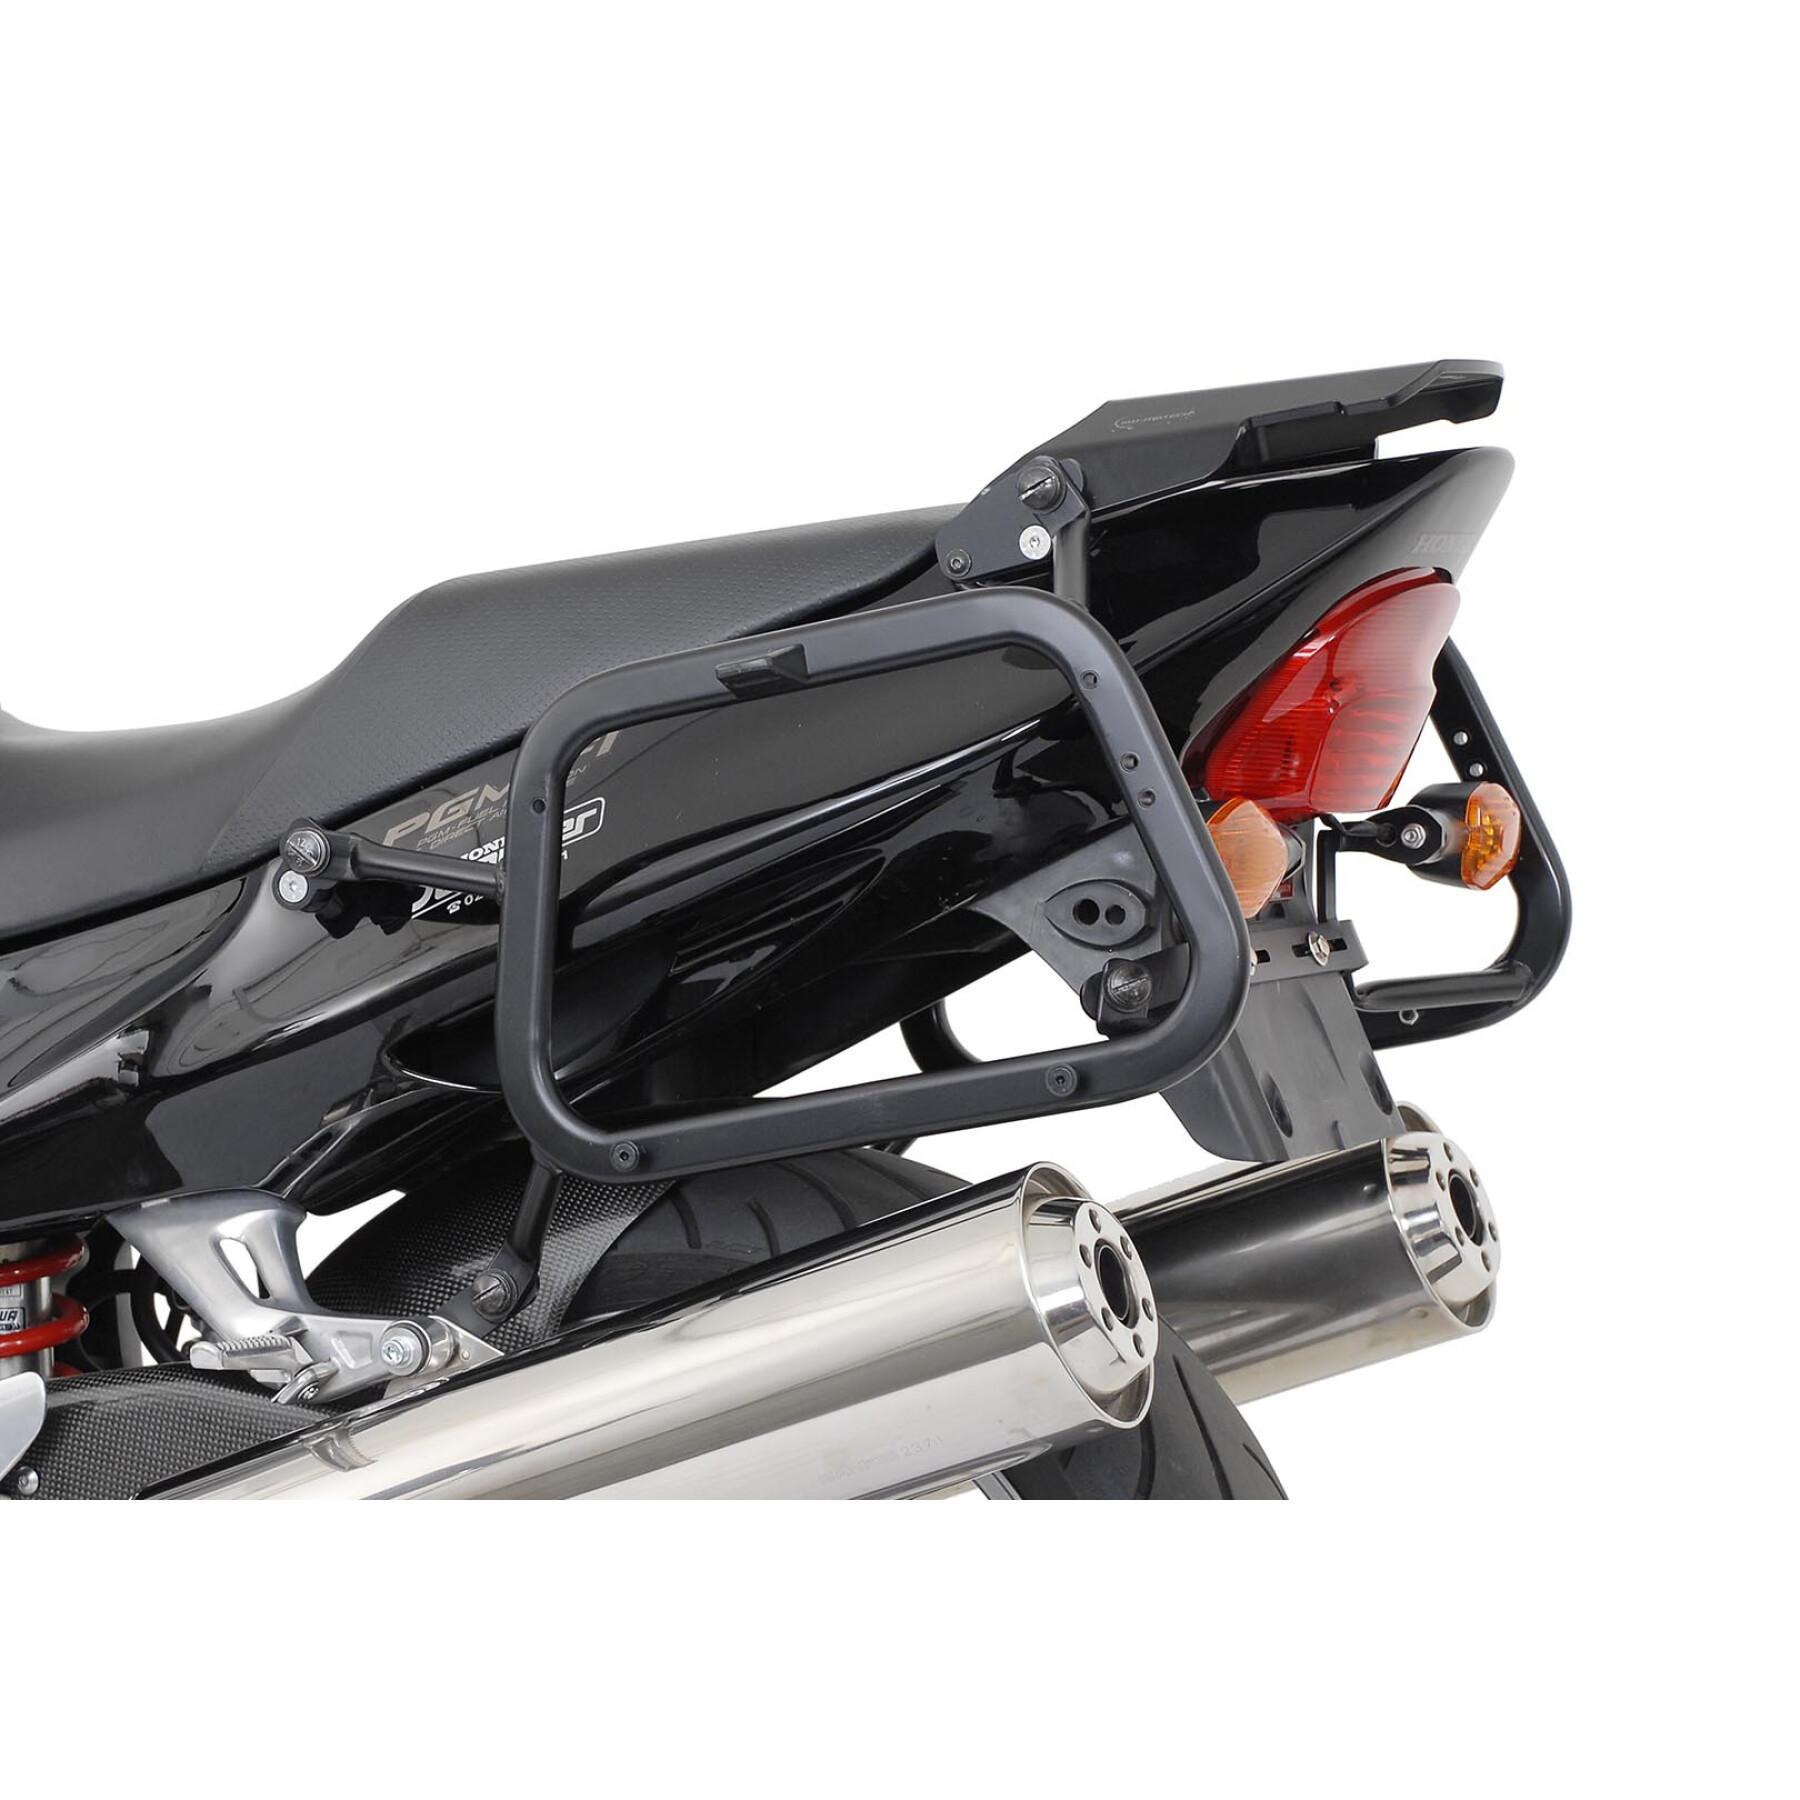 Support valises latérales moto Sw-Motech Evo. Honda Cbr 1100 Xx Blackrbird (99-07)